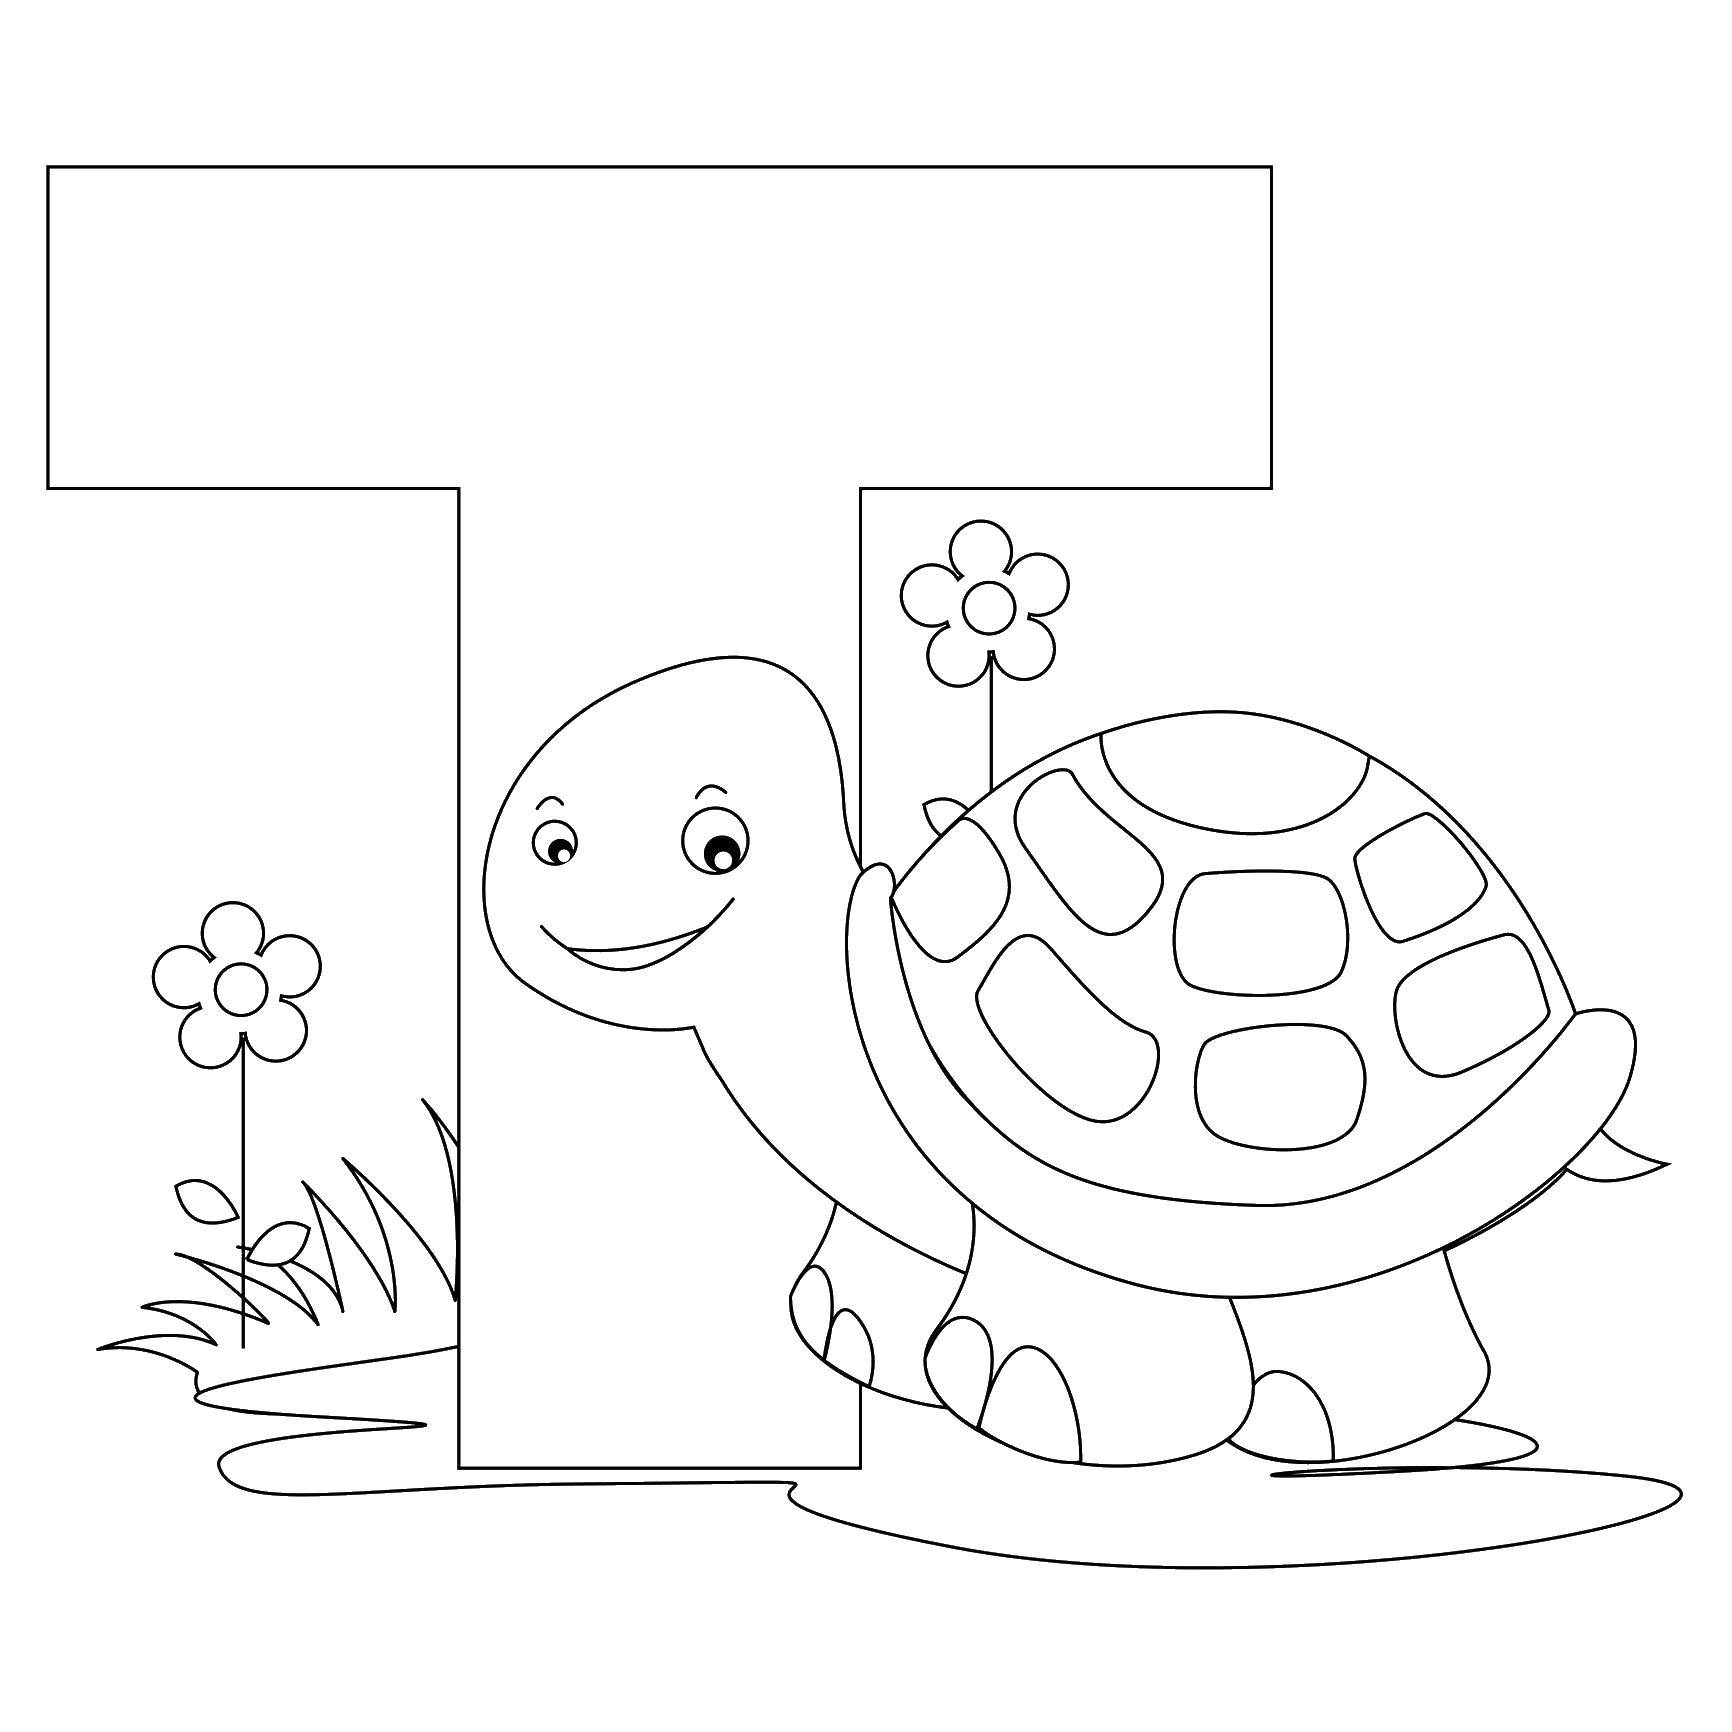 Coloring Turtle. Category English alphabet. Tags:  alphabet, English.